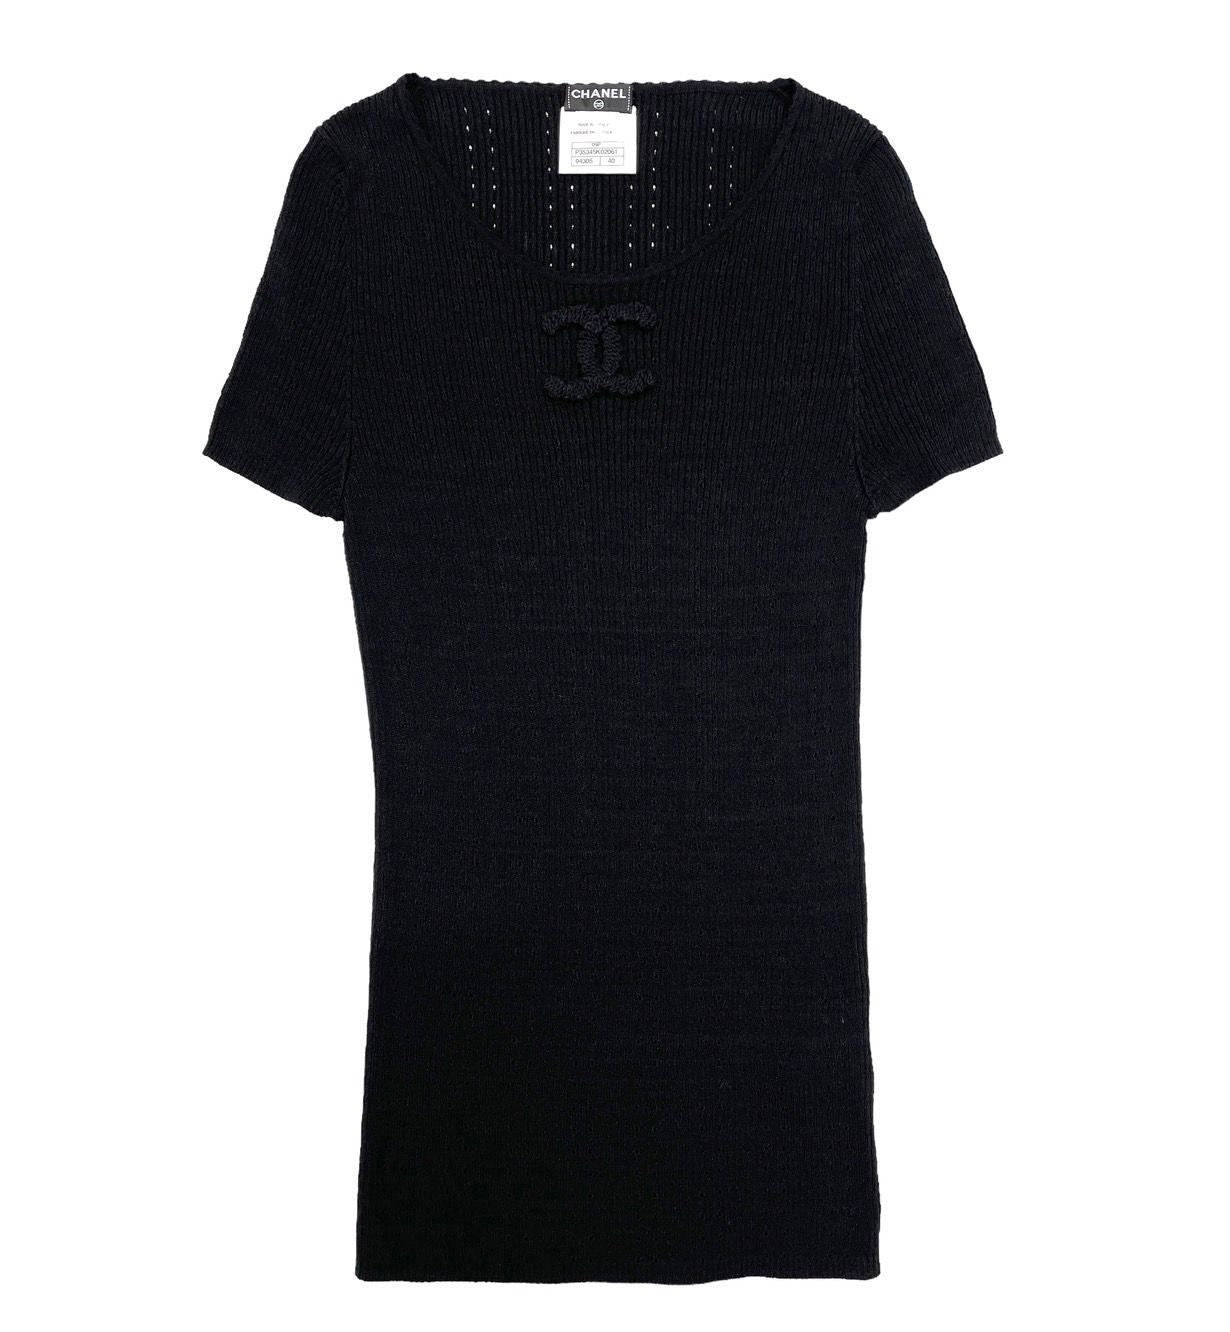 Chanel Black Ribbed Logo Short Sleeve Top